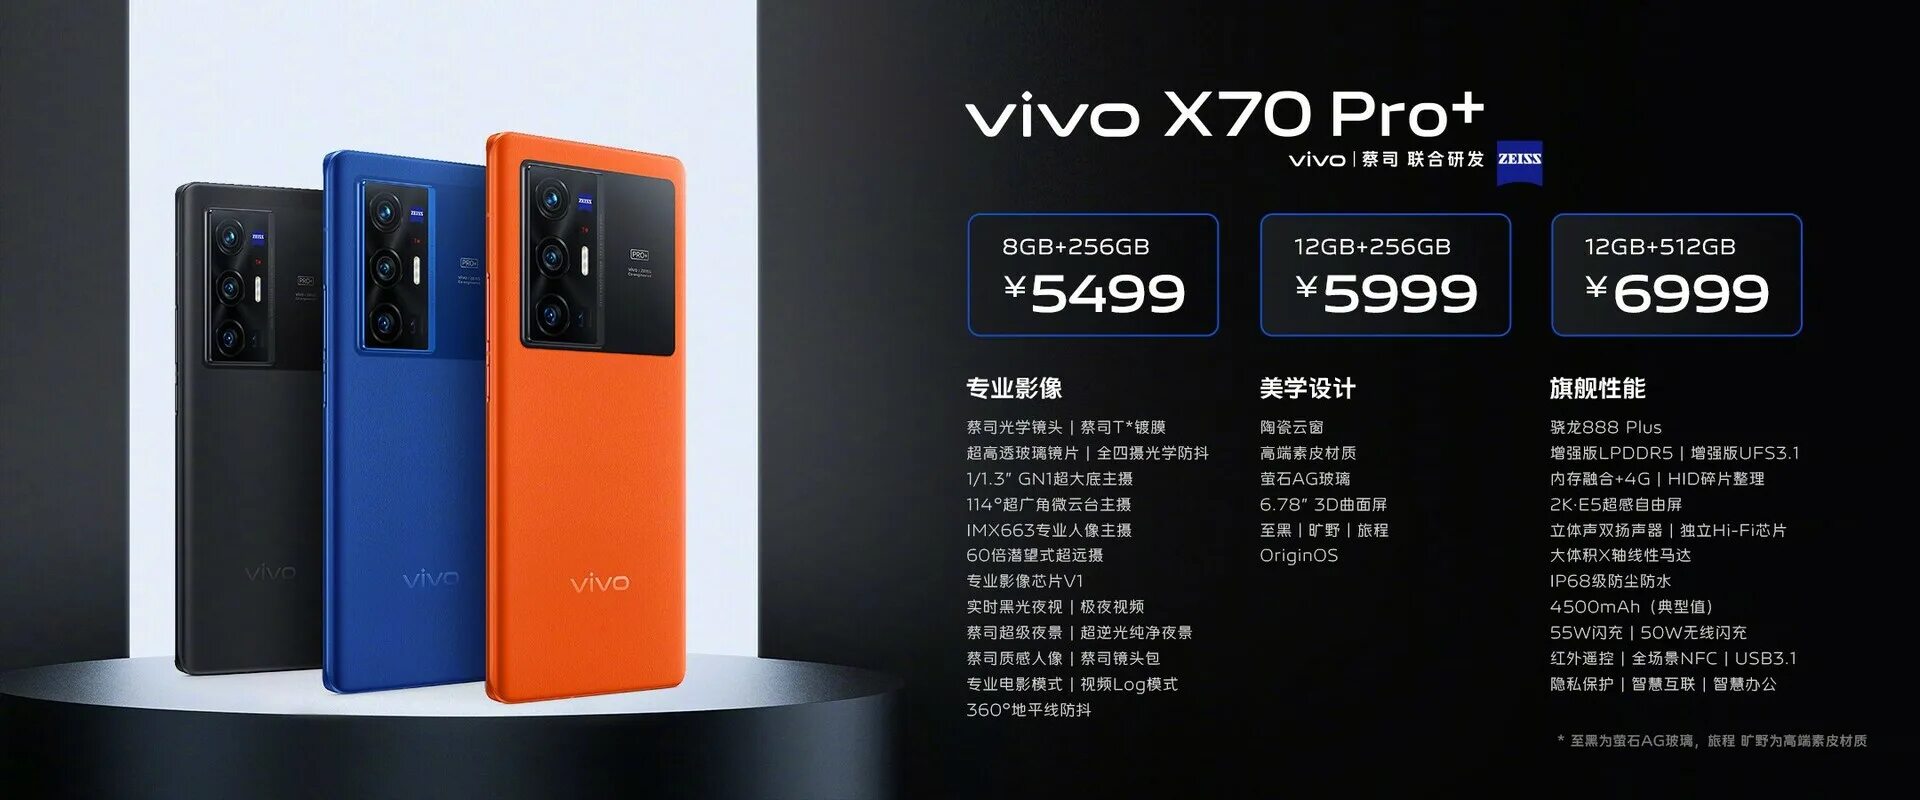 X70pro+. X70 Pro Plus. Vivo x70 Pro Plus характеристики. X70 Pro. P70 pro